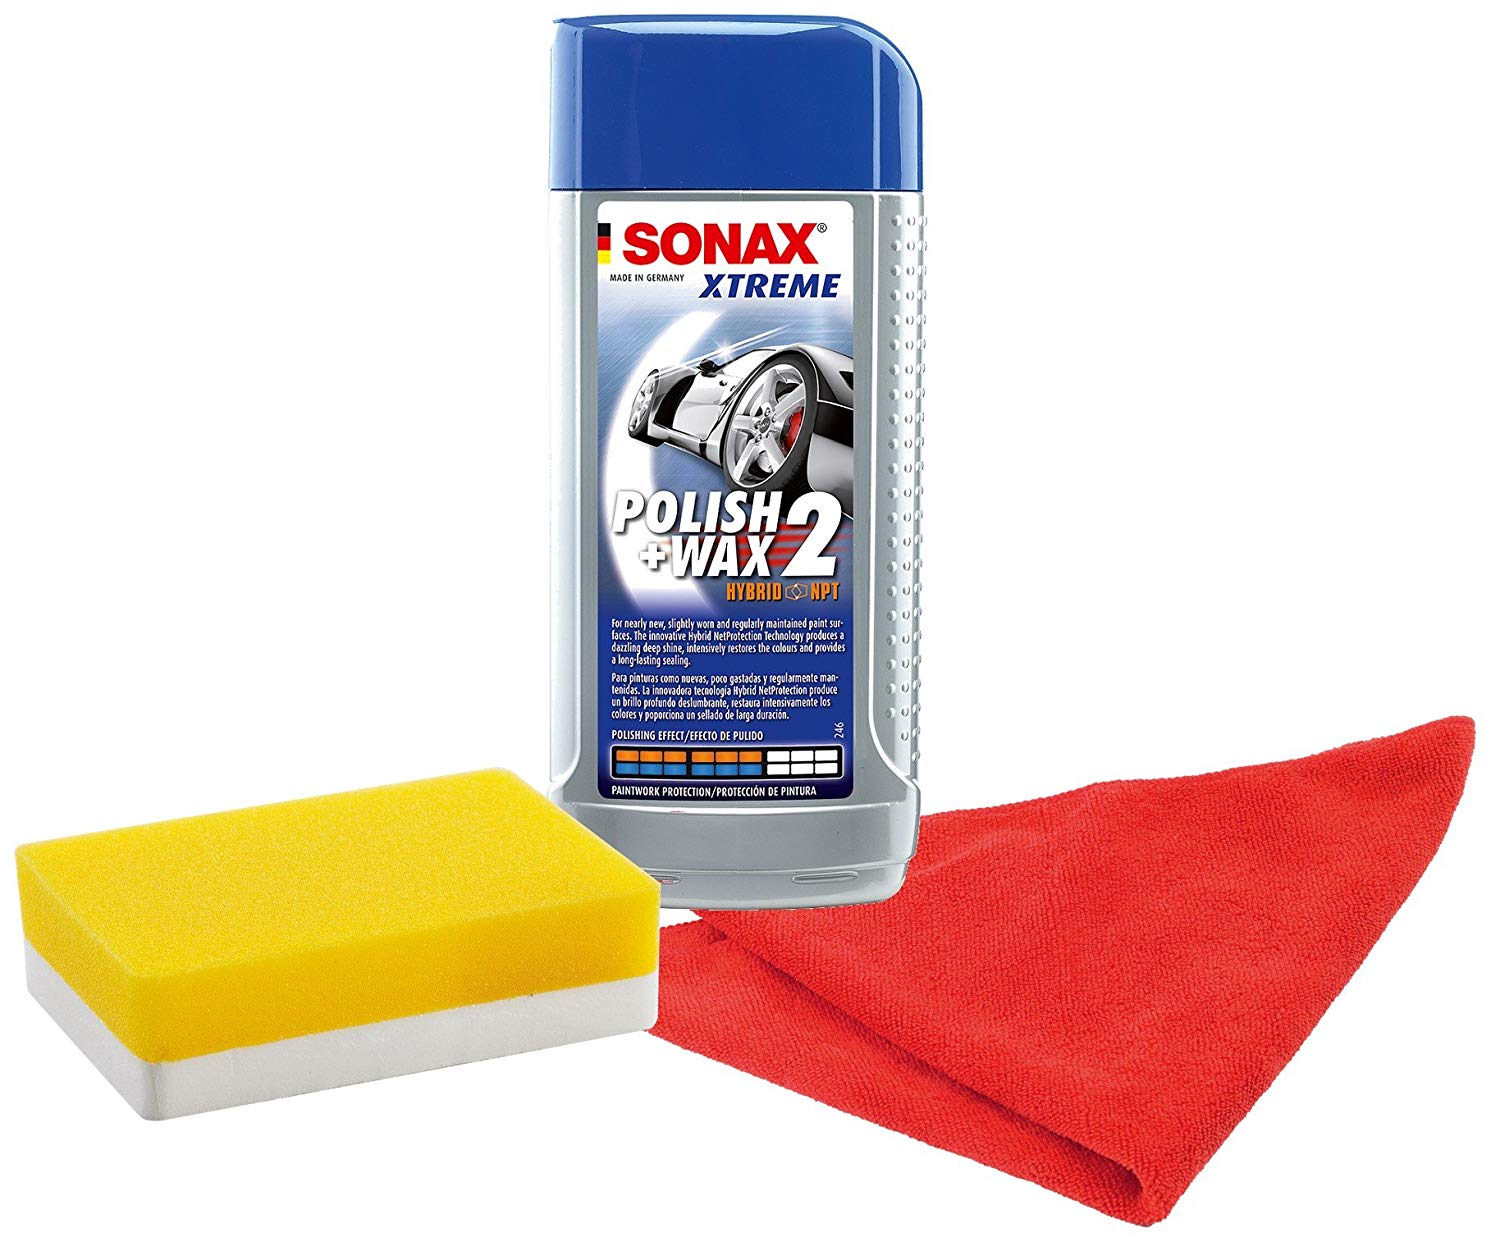 Sonax Xtreme Polish + Wax 2 Hybrid NPT SET